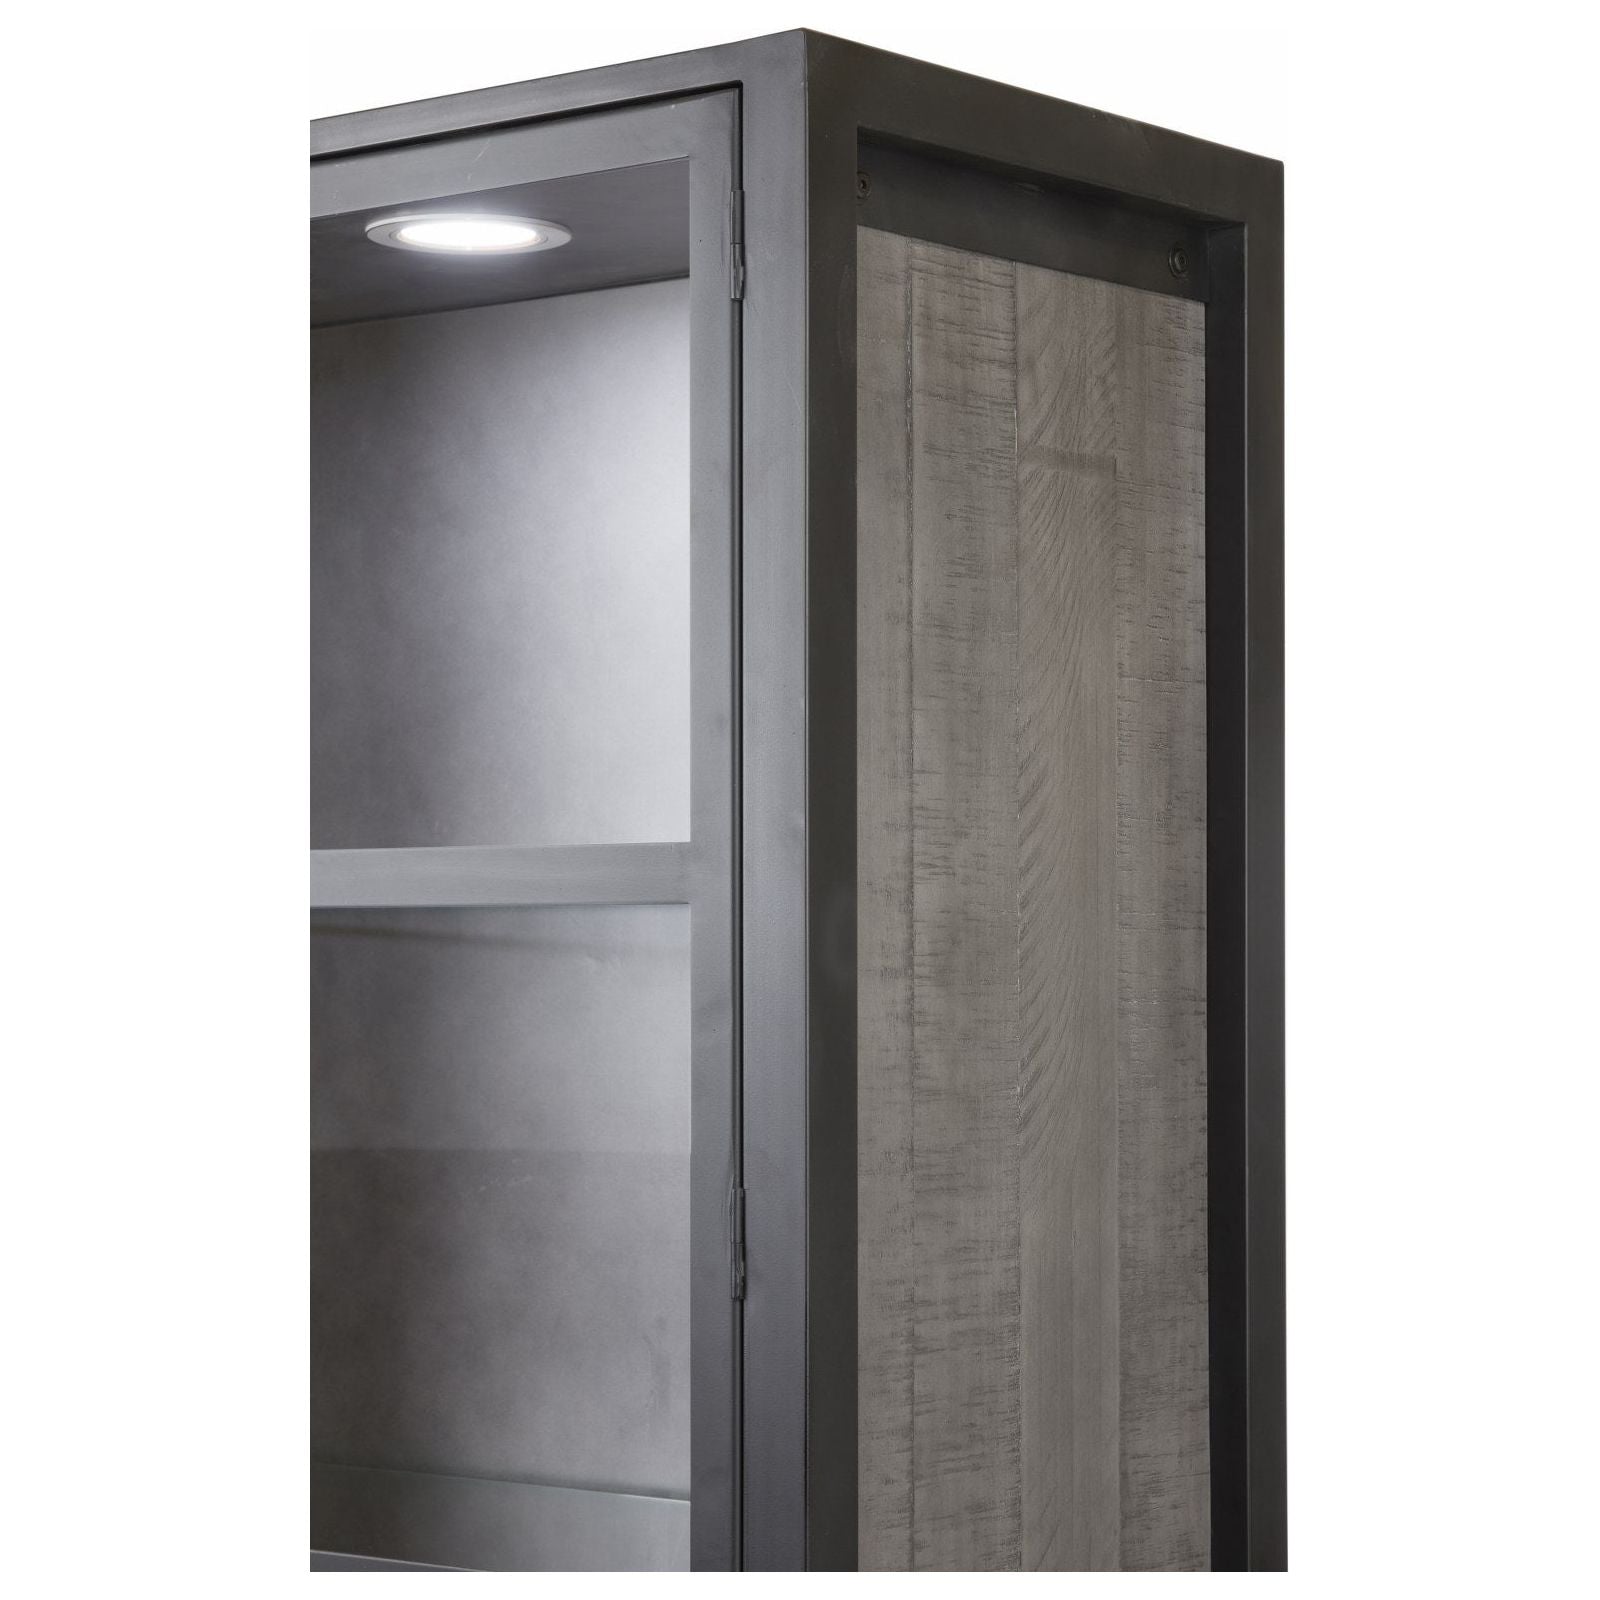 Display cabinet | Furniture series Micras | Dark gray, black | 110